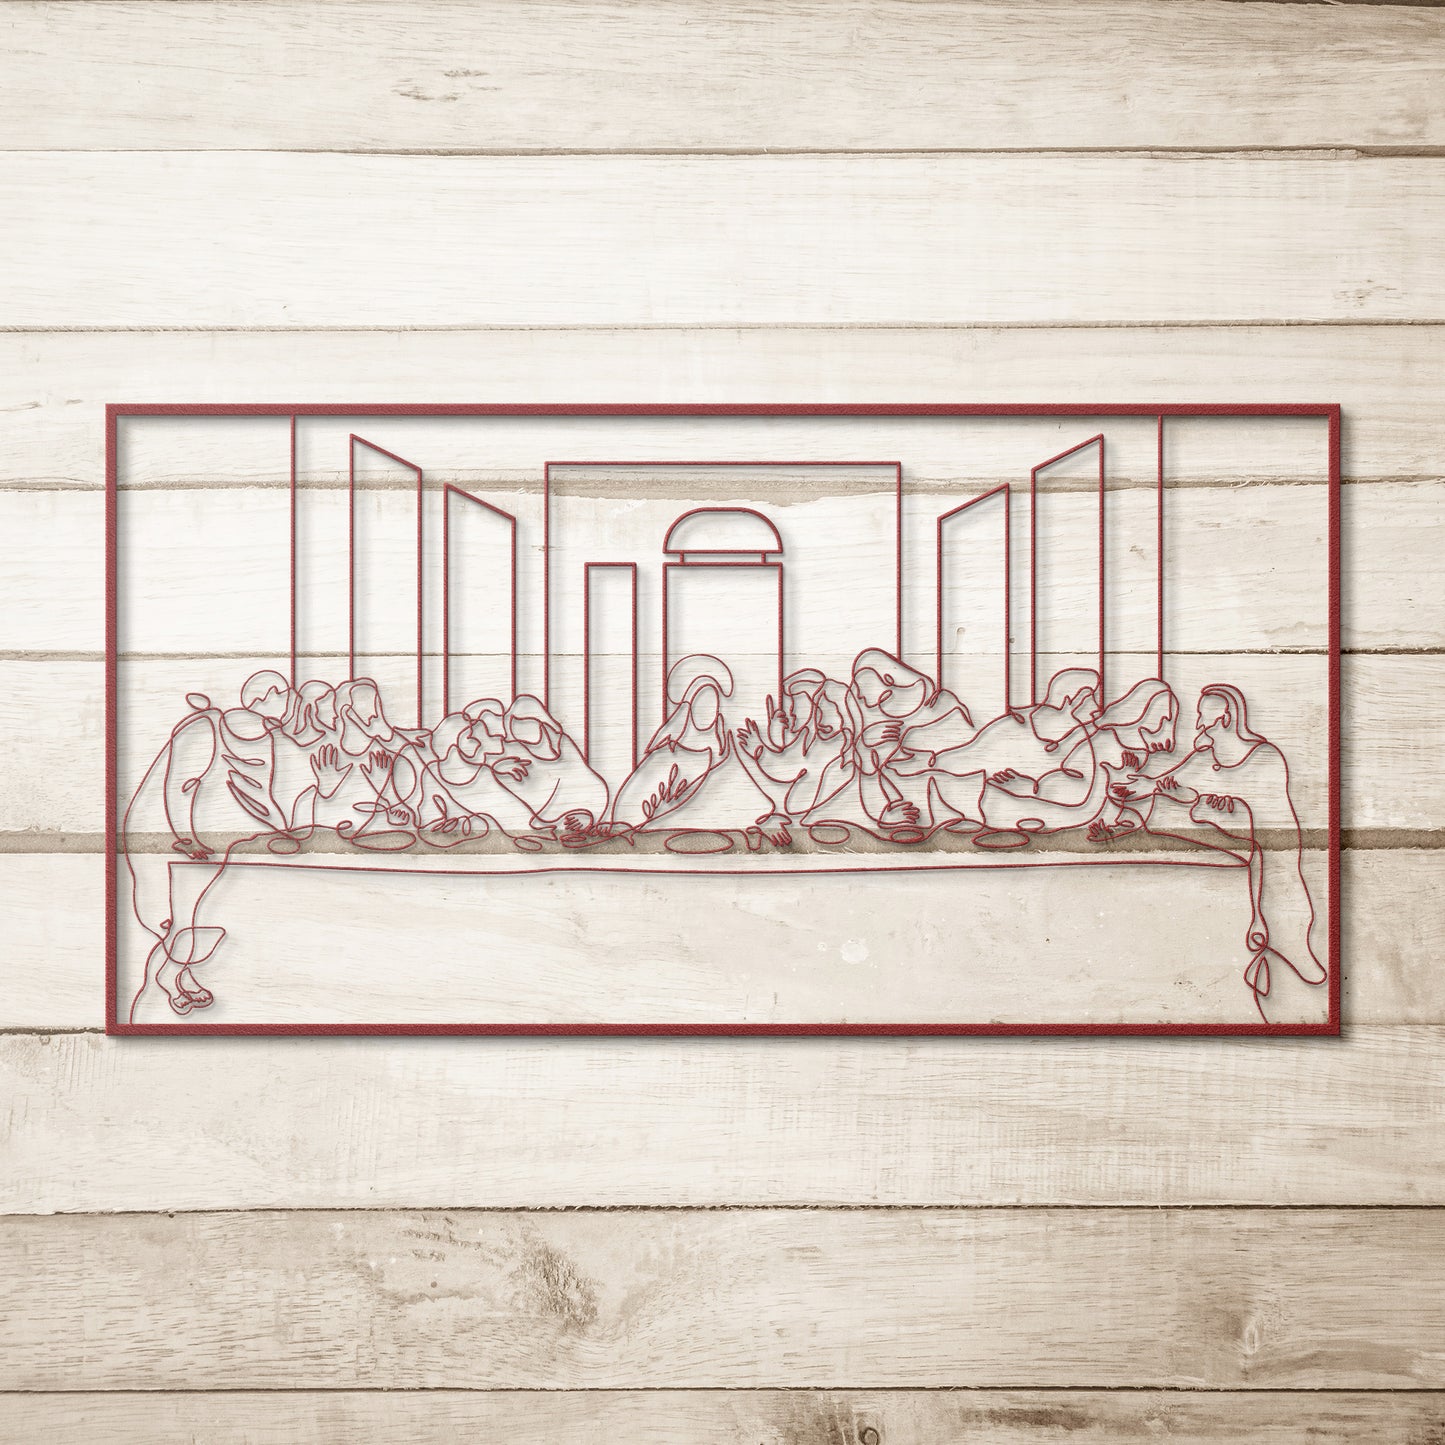 Da Vinci The Last Supper Continuous Line Drawing Metal Wall Art